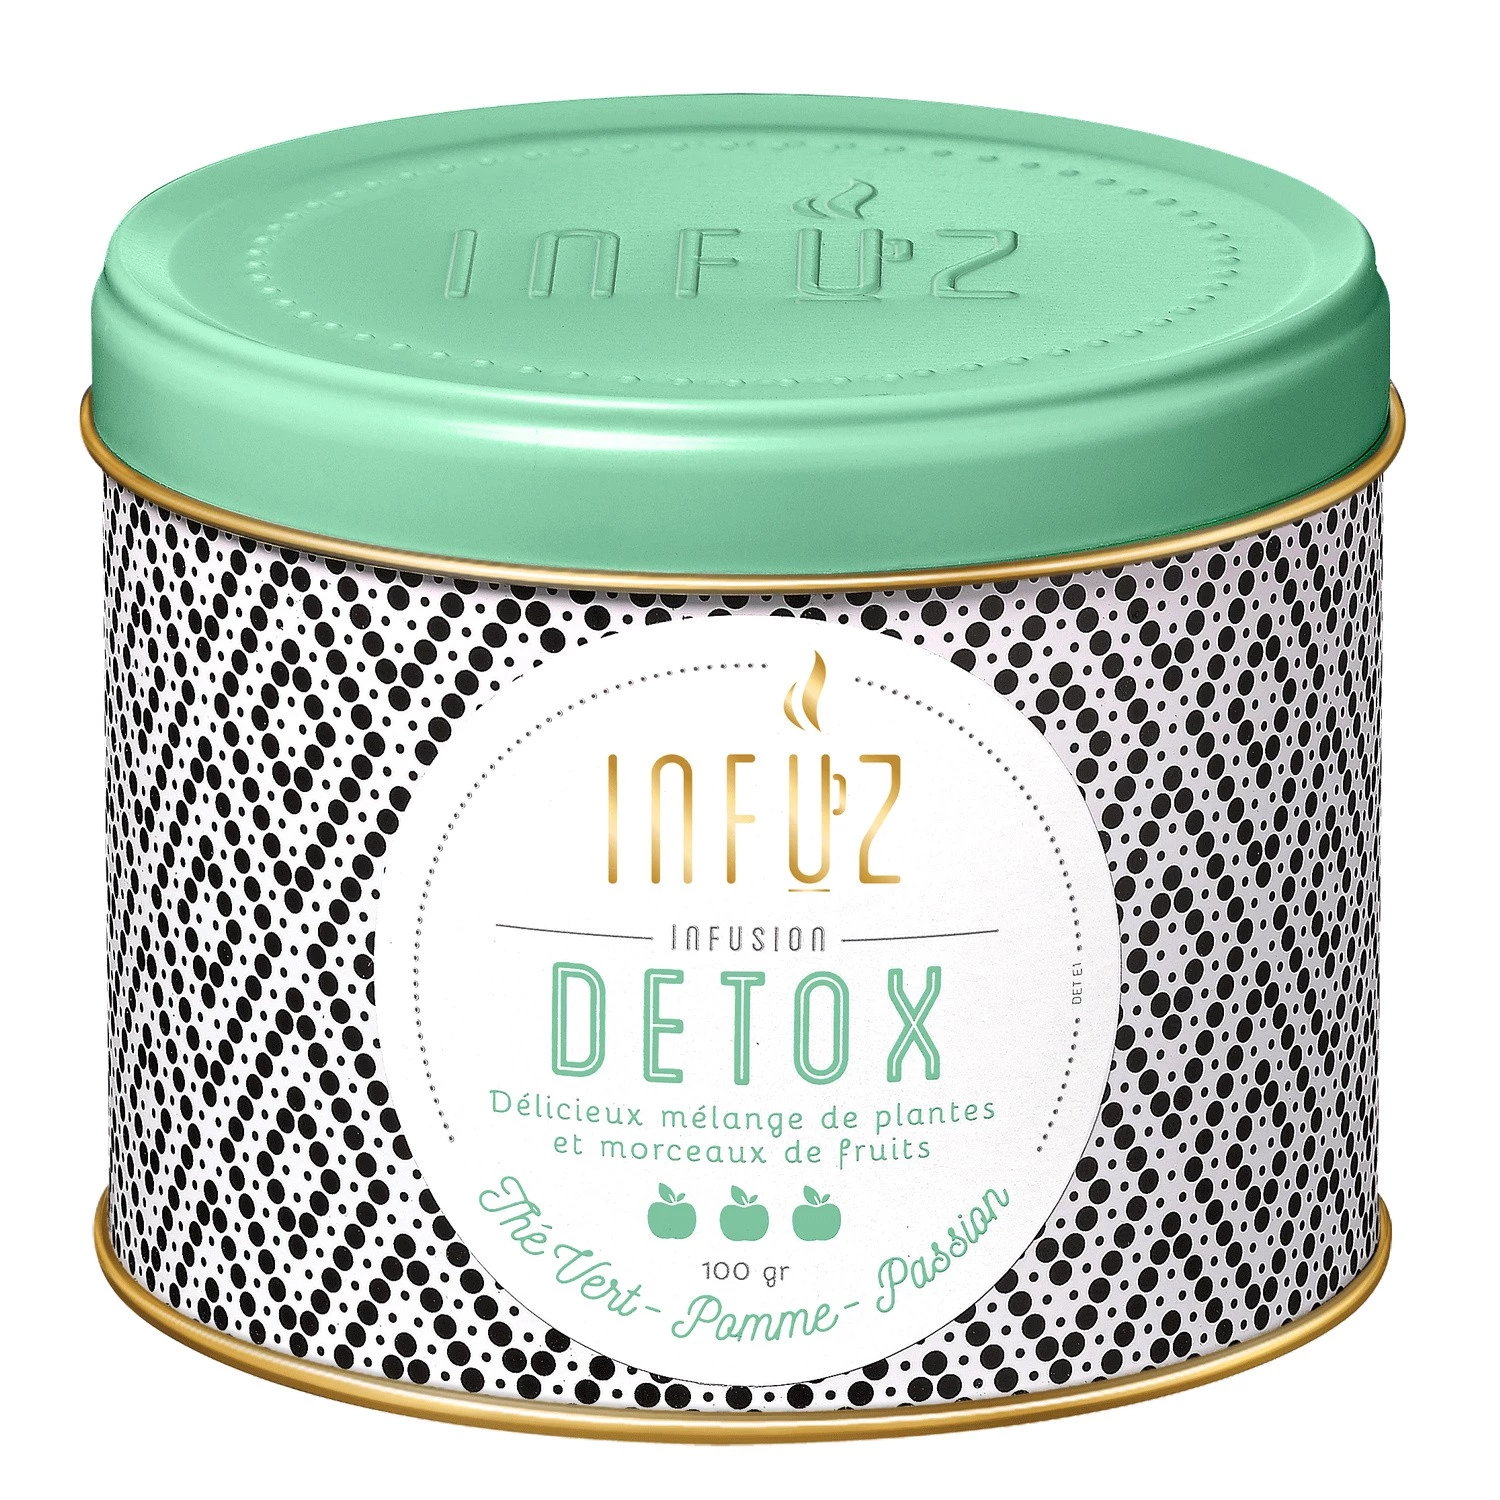 Detox infusion green tea, apple, passion fruit 100g - INFUZ